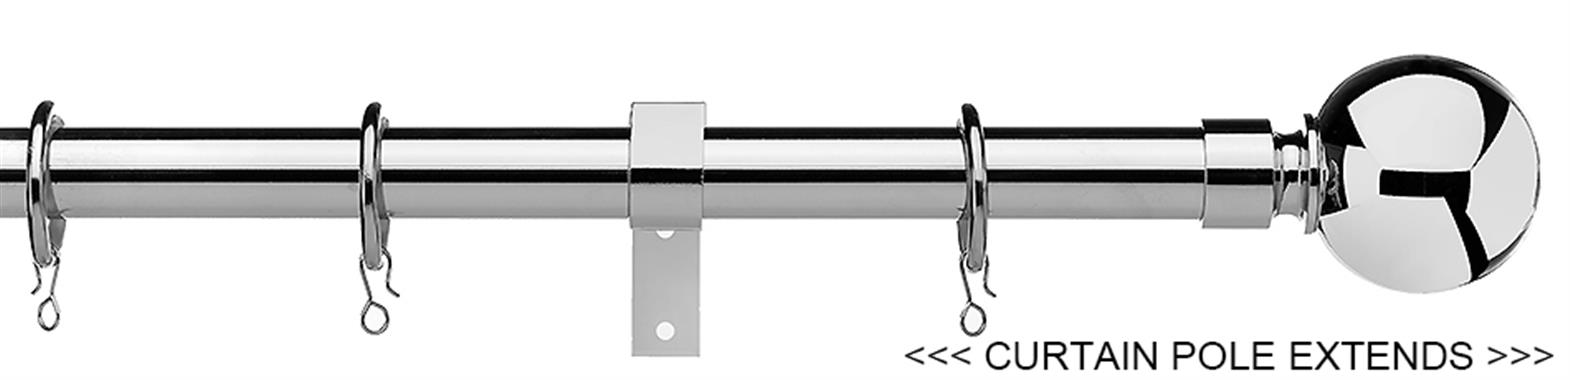 Universal 16/19mm Metal Extendable Curtain Pole, Chrome, Ball